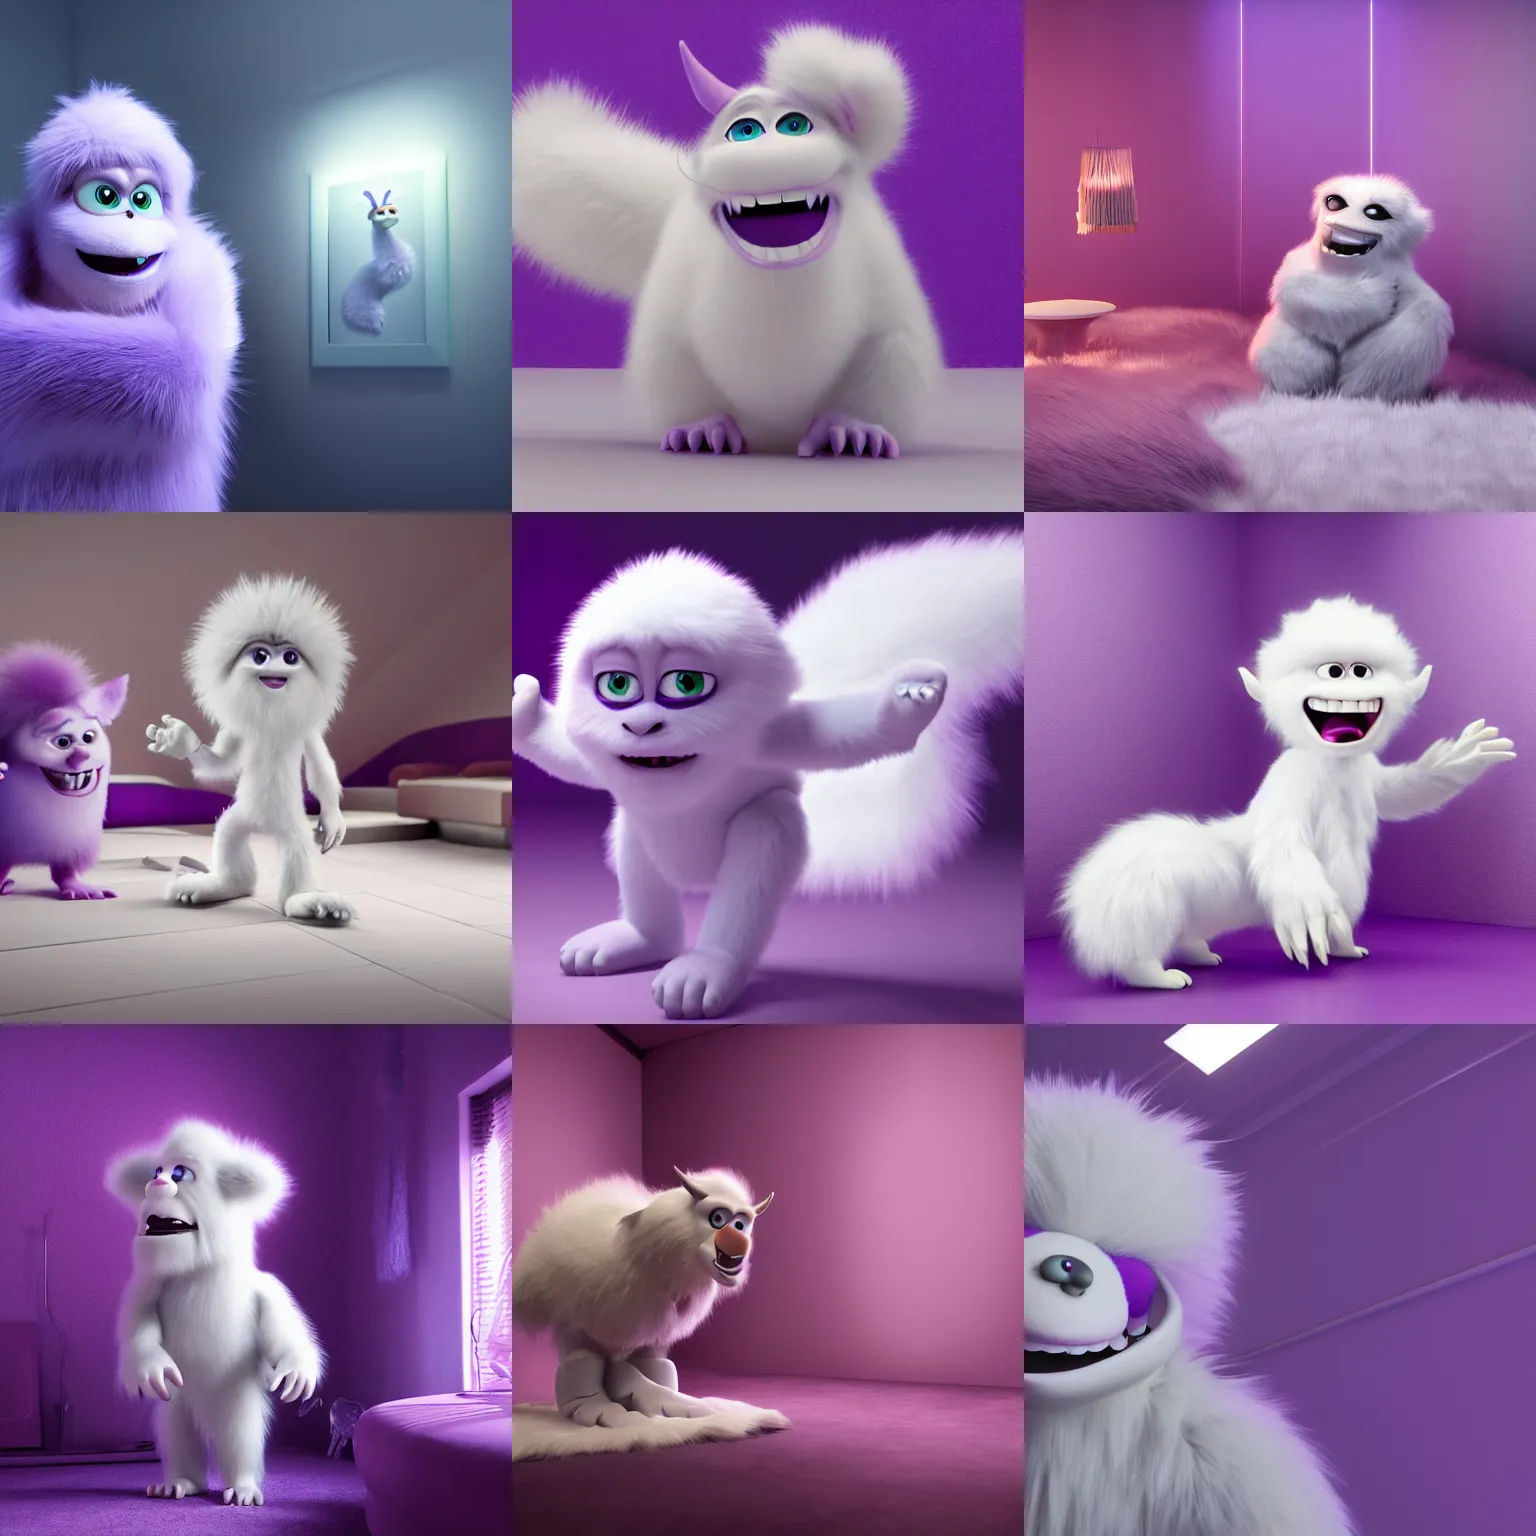 Prompt: A white fur monster in a purple room, cgi, octane render, pixar character, studio lighting